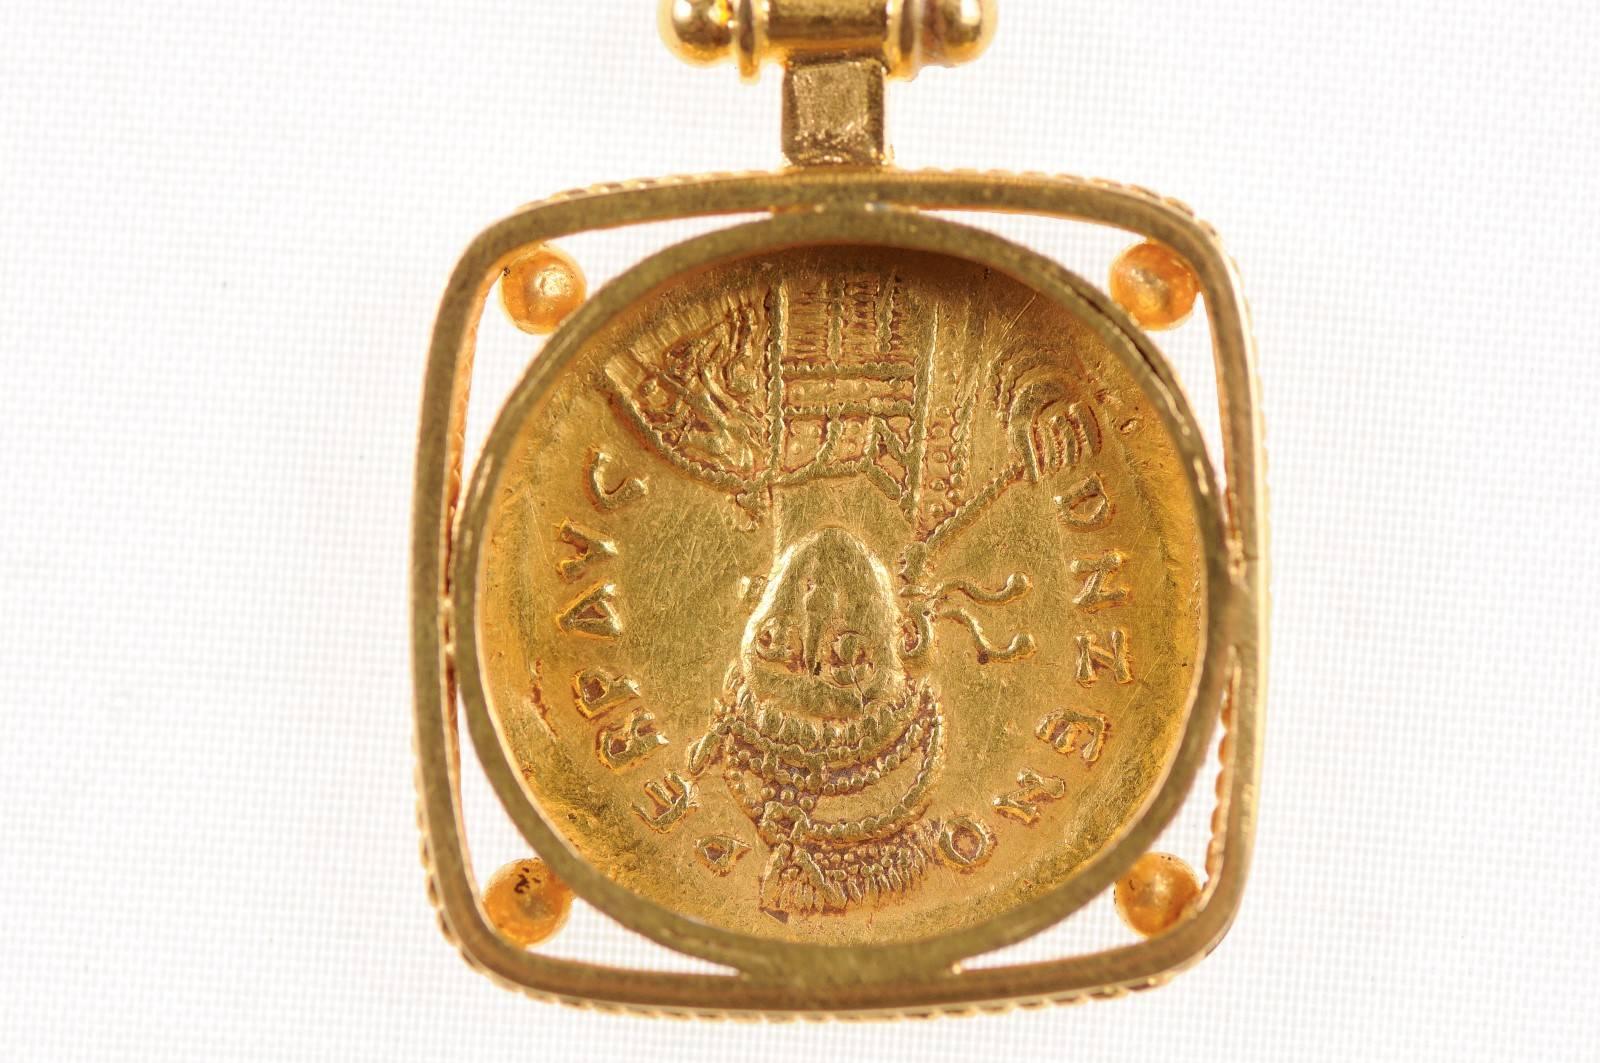 Authentic Solidus Roman Imperial Coin in 22k Gold Necklace Pendant, circa 476 AD In Good Condition For Sale In Atlanta, GA